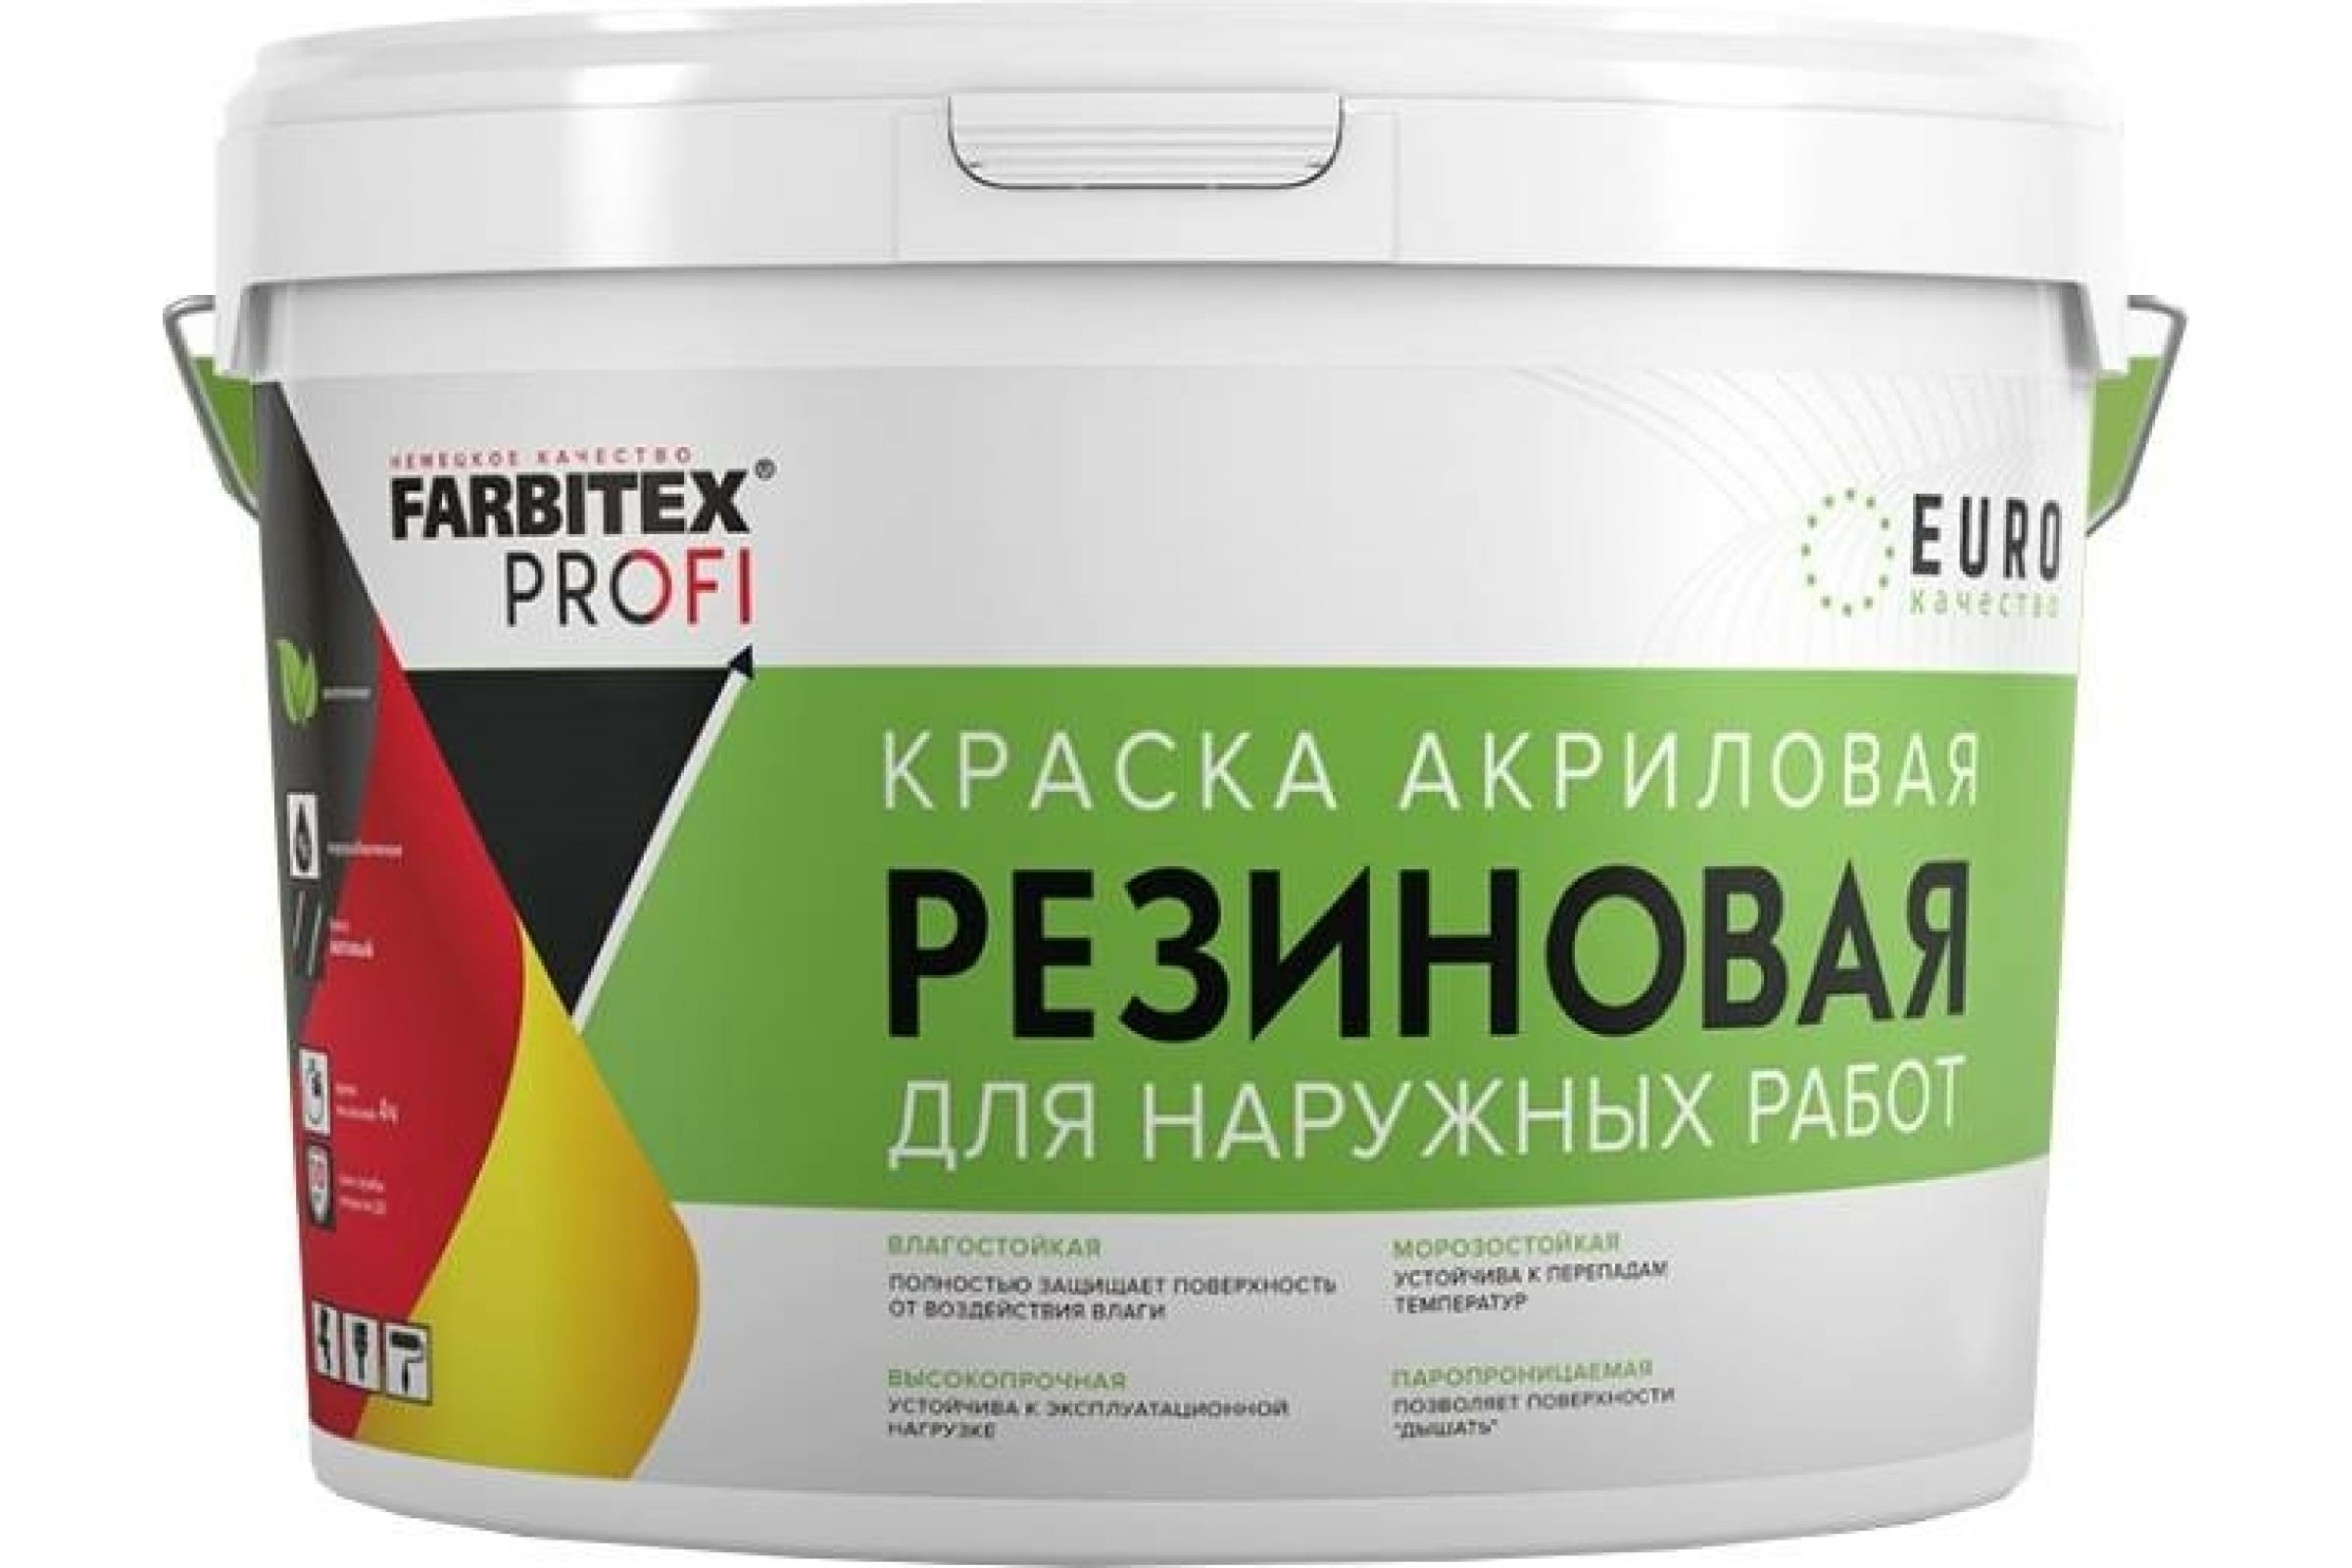 фото Farbitex краска акриловая резиноваяголубой (7 кг) профи 4300002361